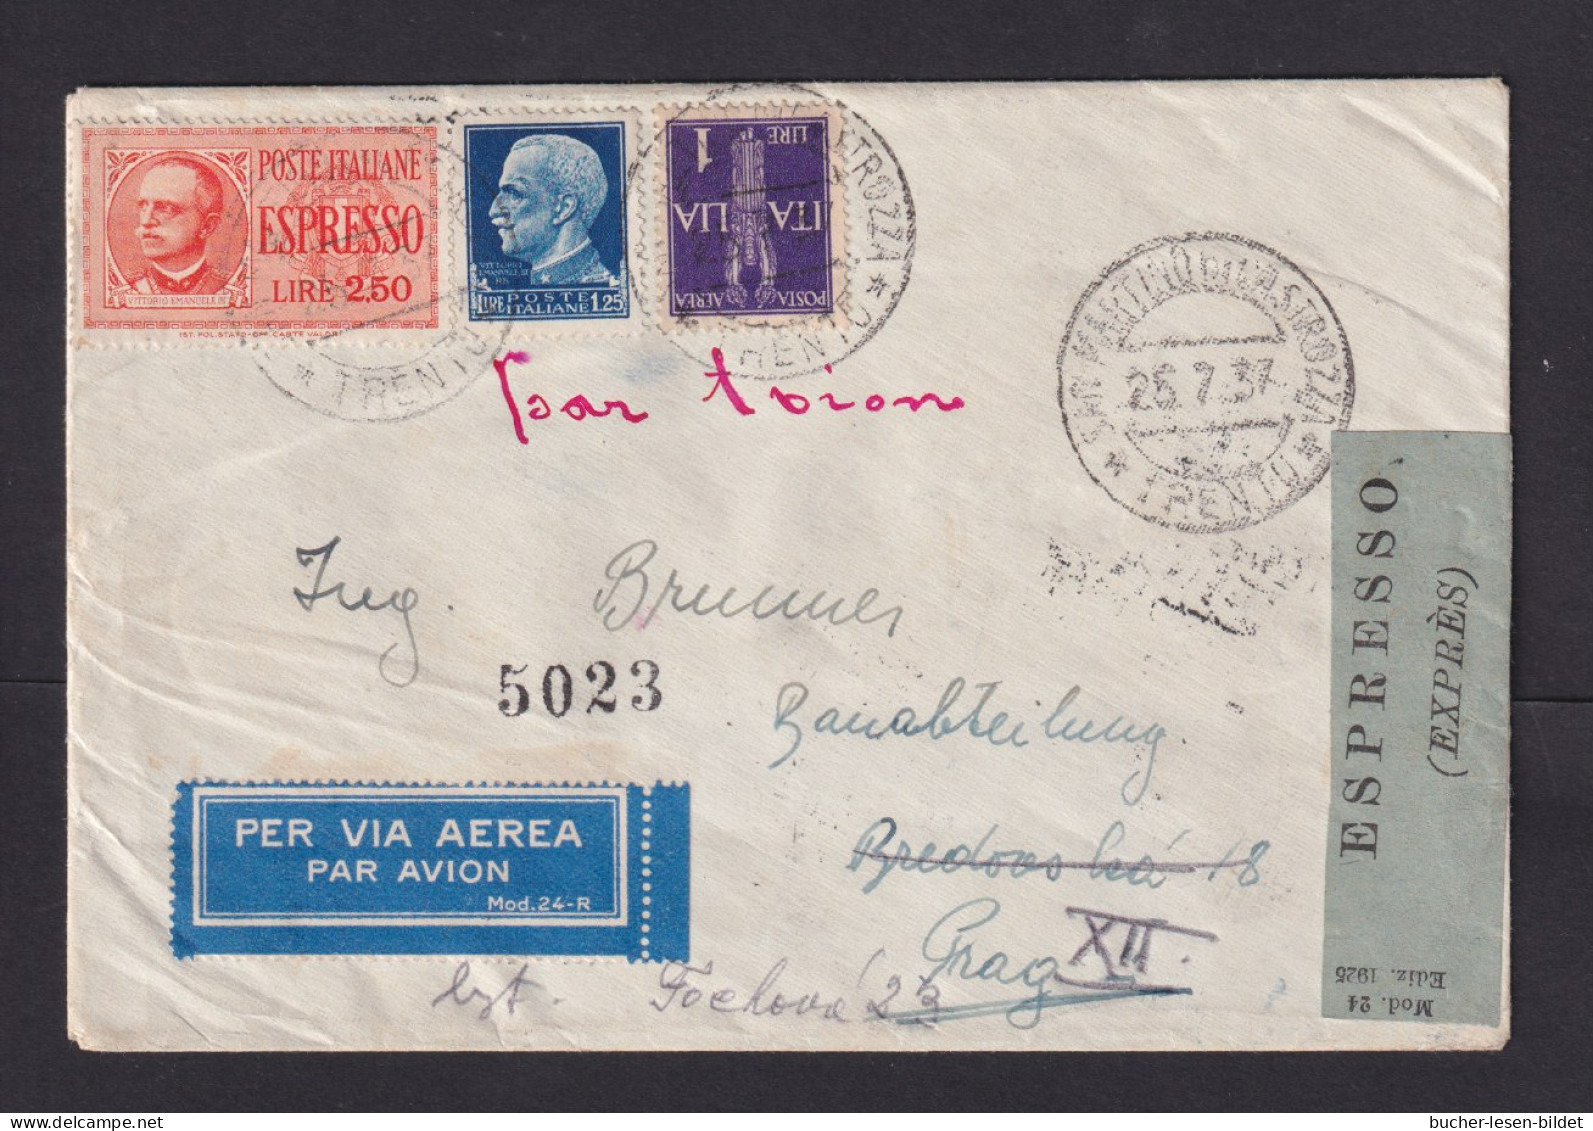 1937 - Eilboten-Luftpostbrief Ab San Martino Di Castrozza Nach Prag - Interi Postali